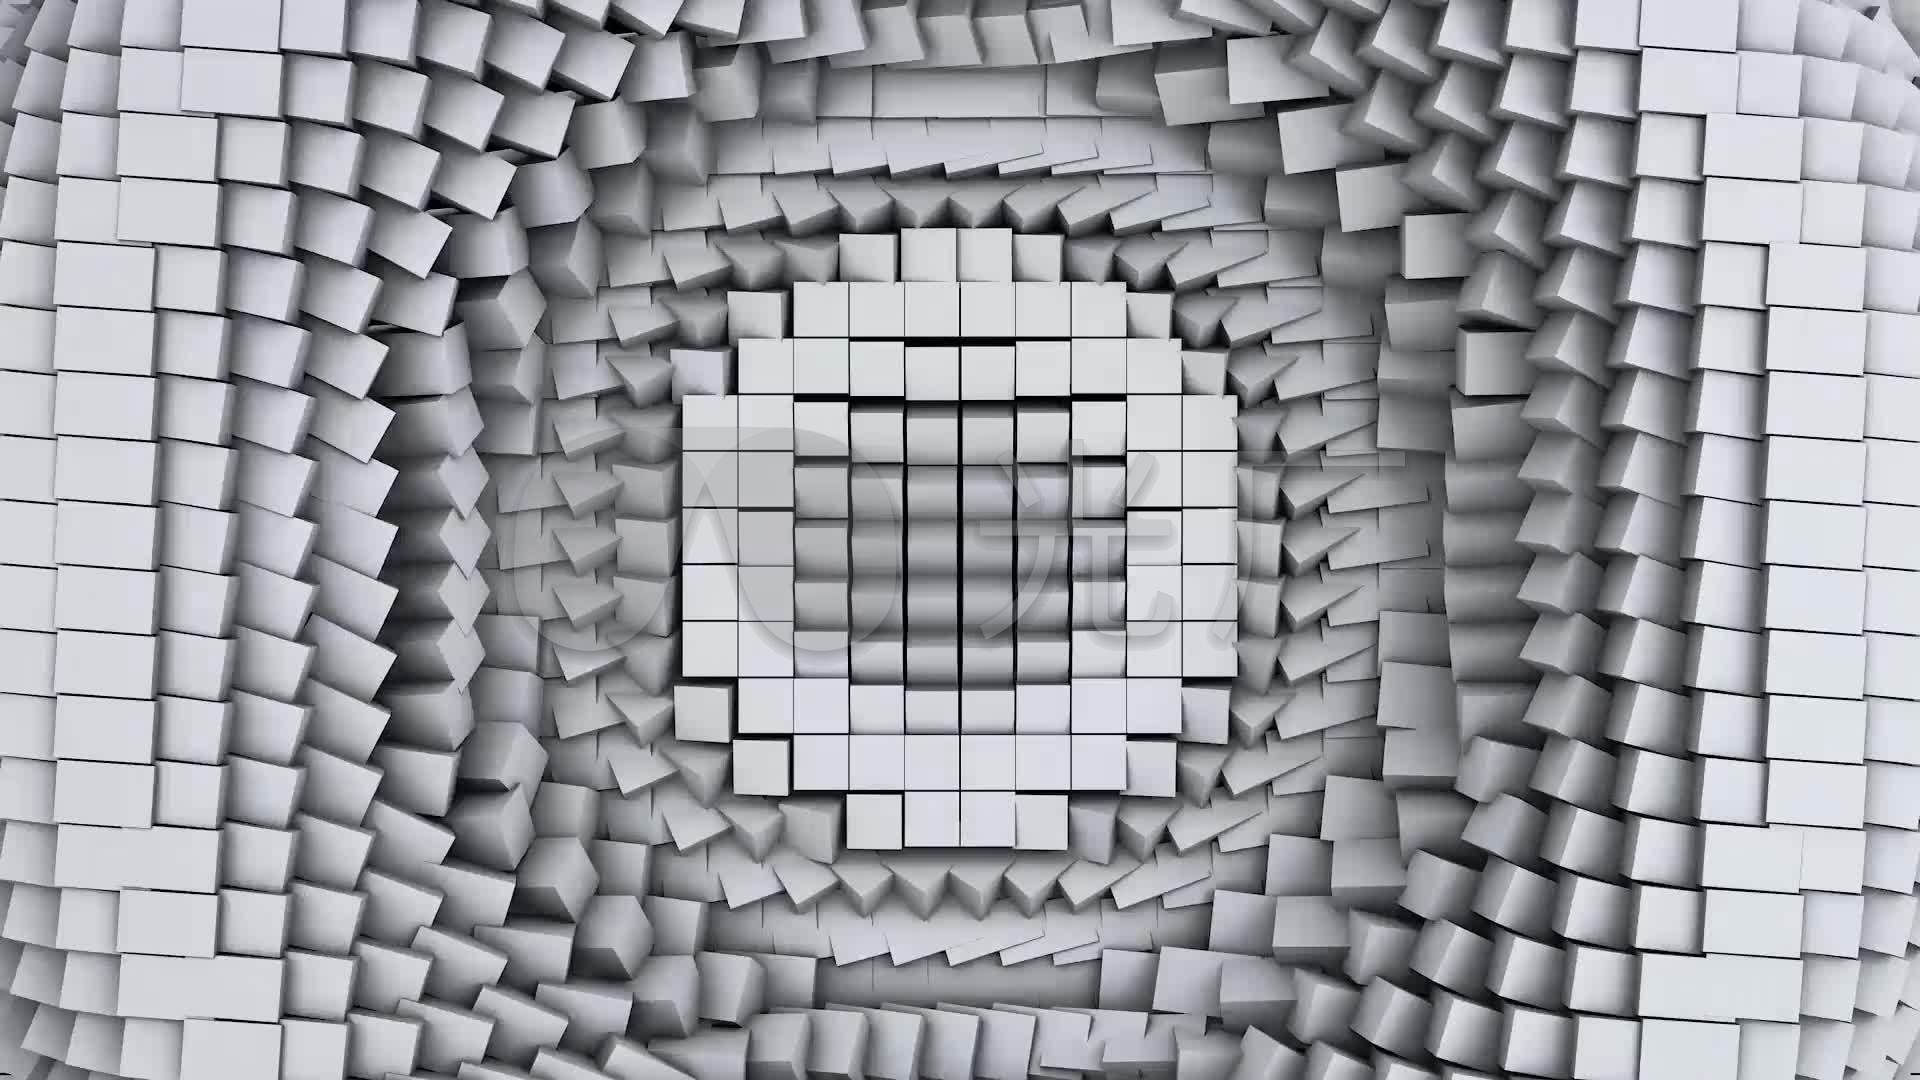 boxes-mapping 裸眼3D秀|三维|建筑/空间|潇洒吃西瓜 - 原创作品 - 站酷 (ZCOOL)